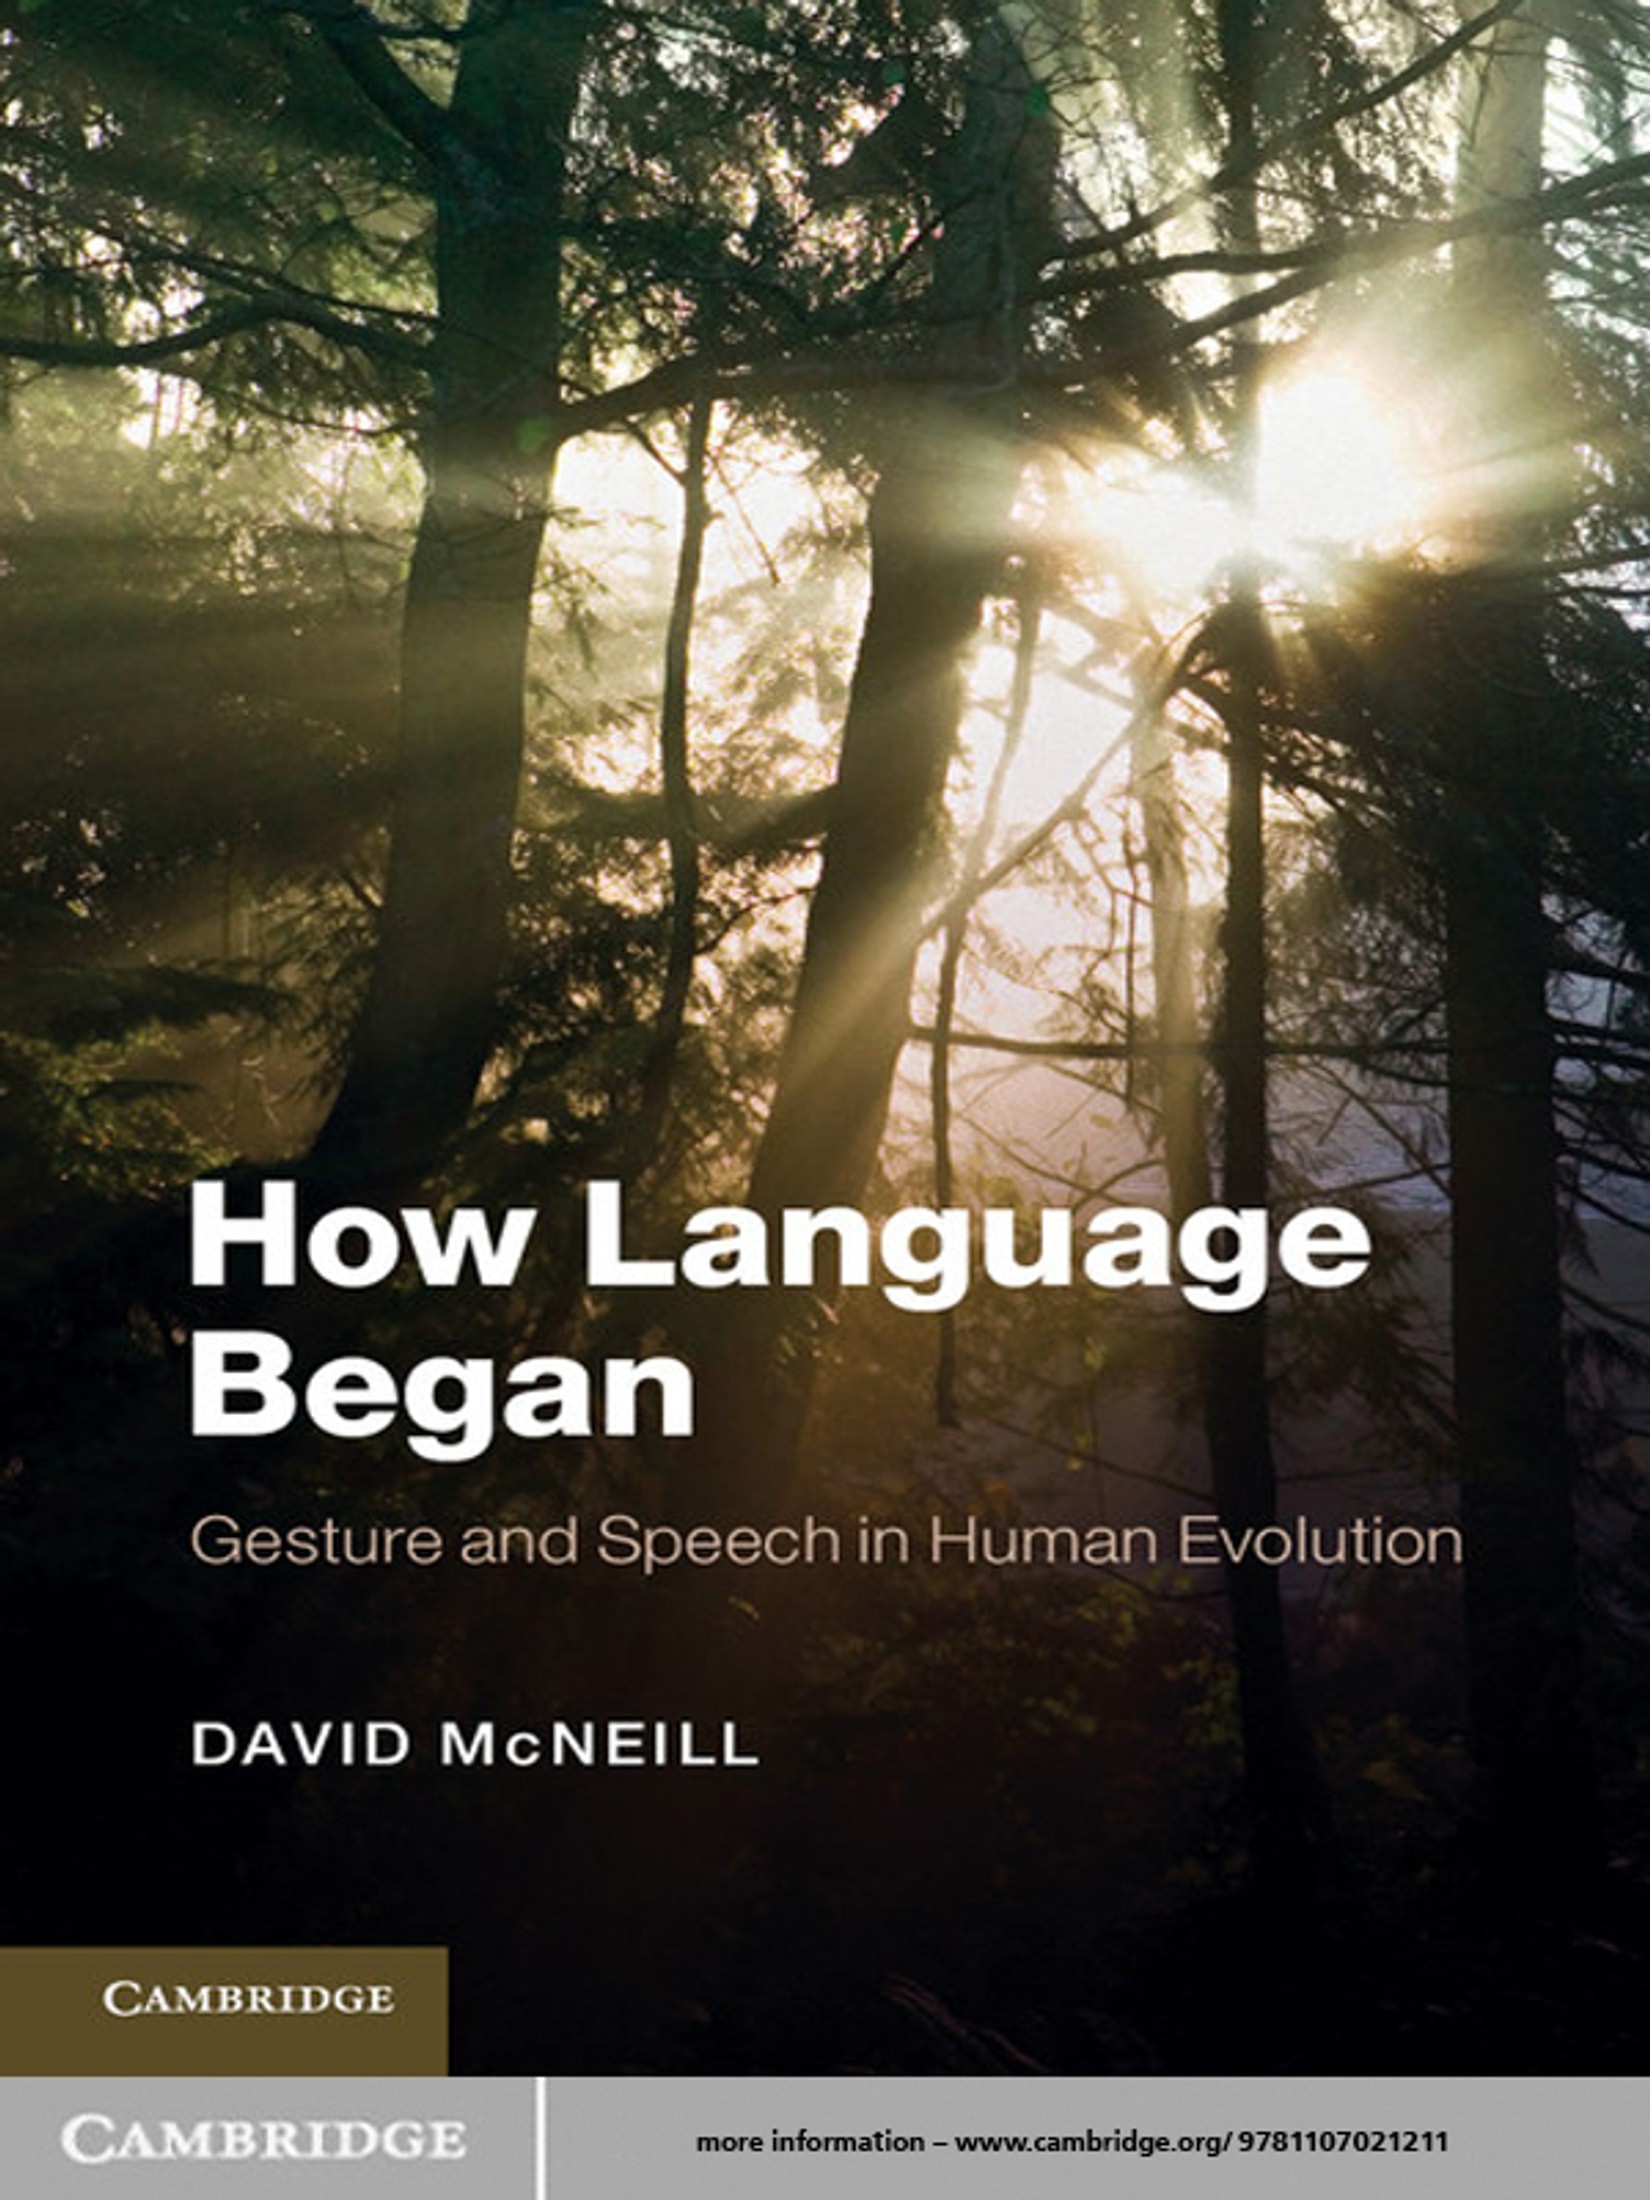 How Language Began: Gesture and Speech in Human Evolution